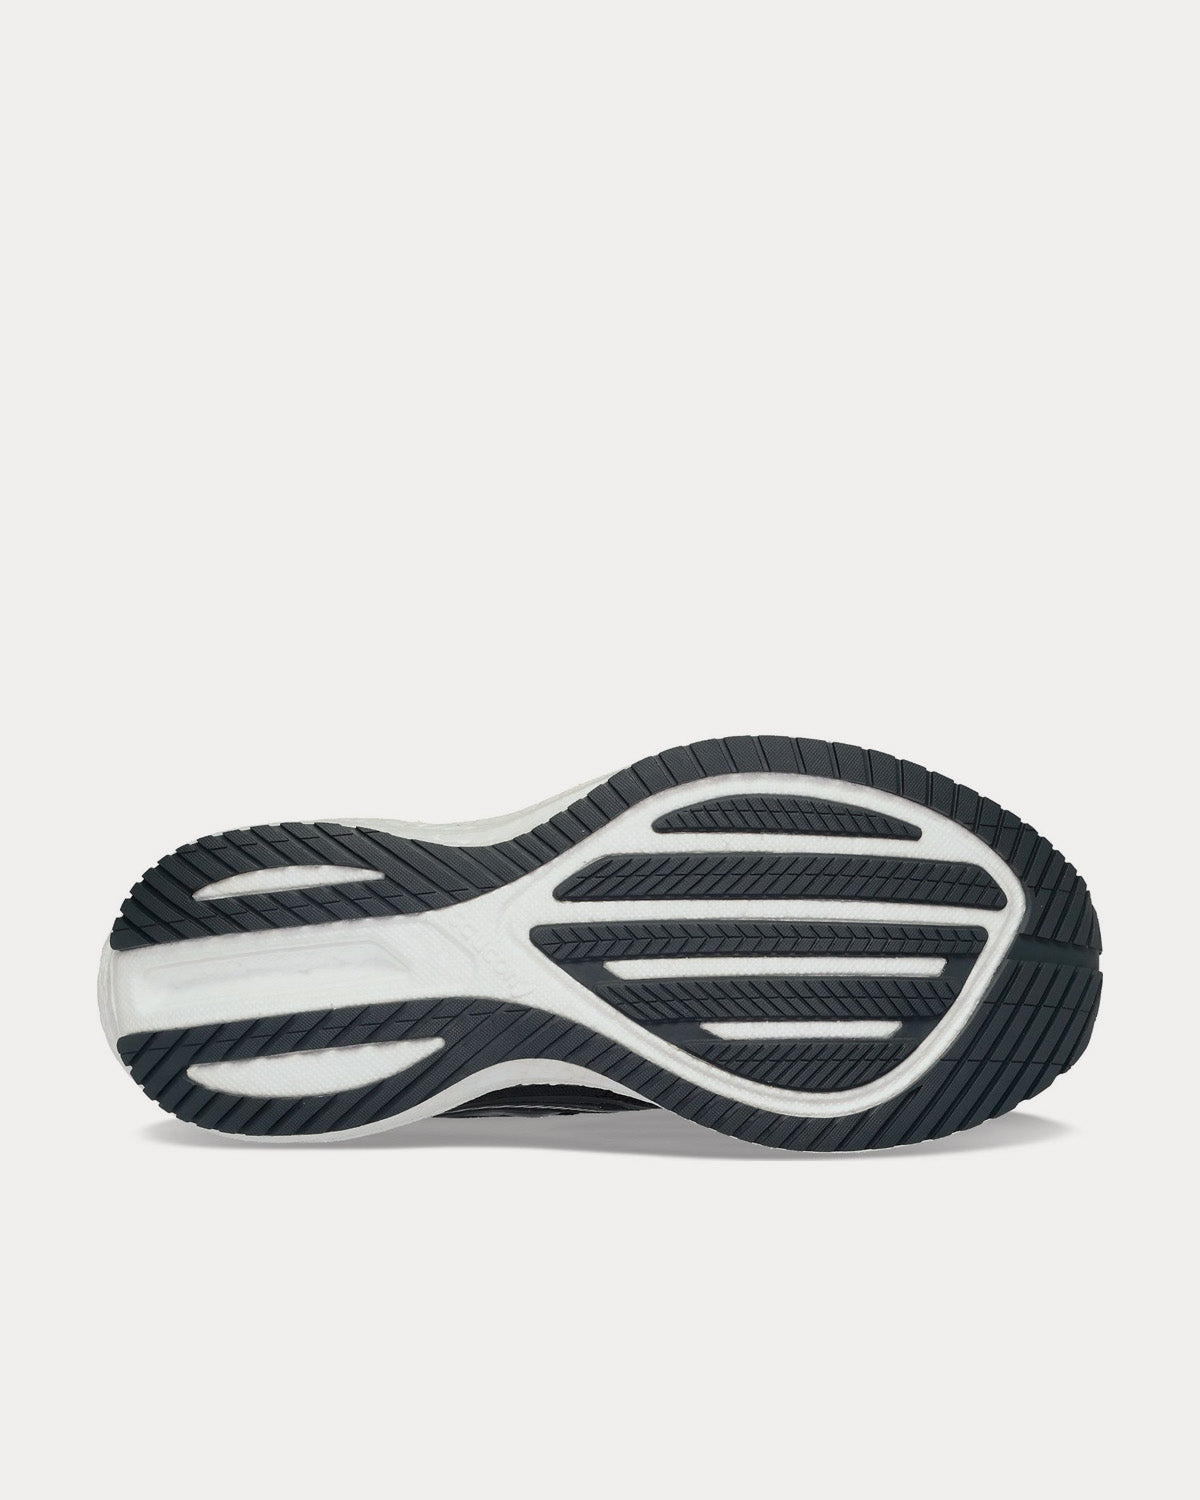 Saucony - Triumph 20 Black / White Running Shoes